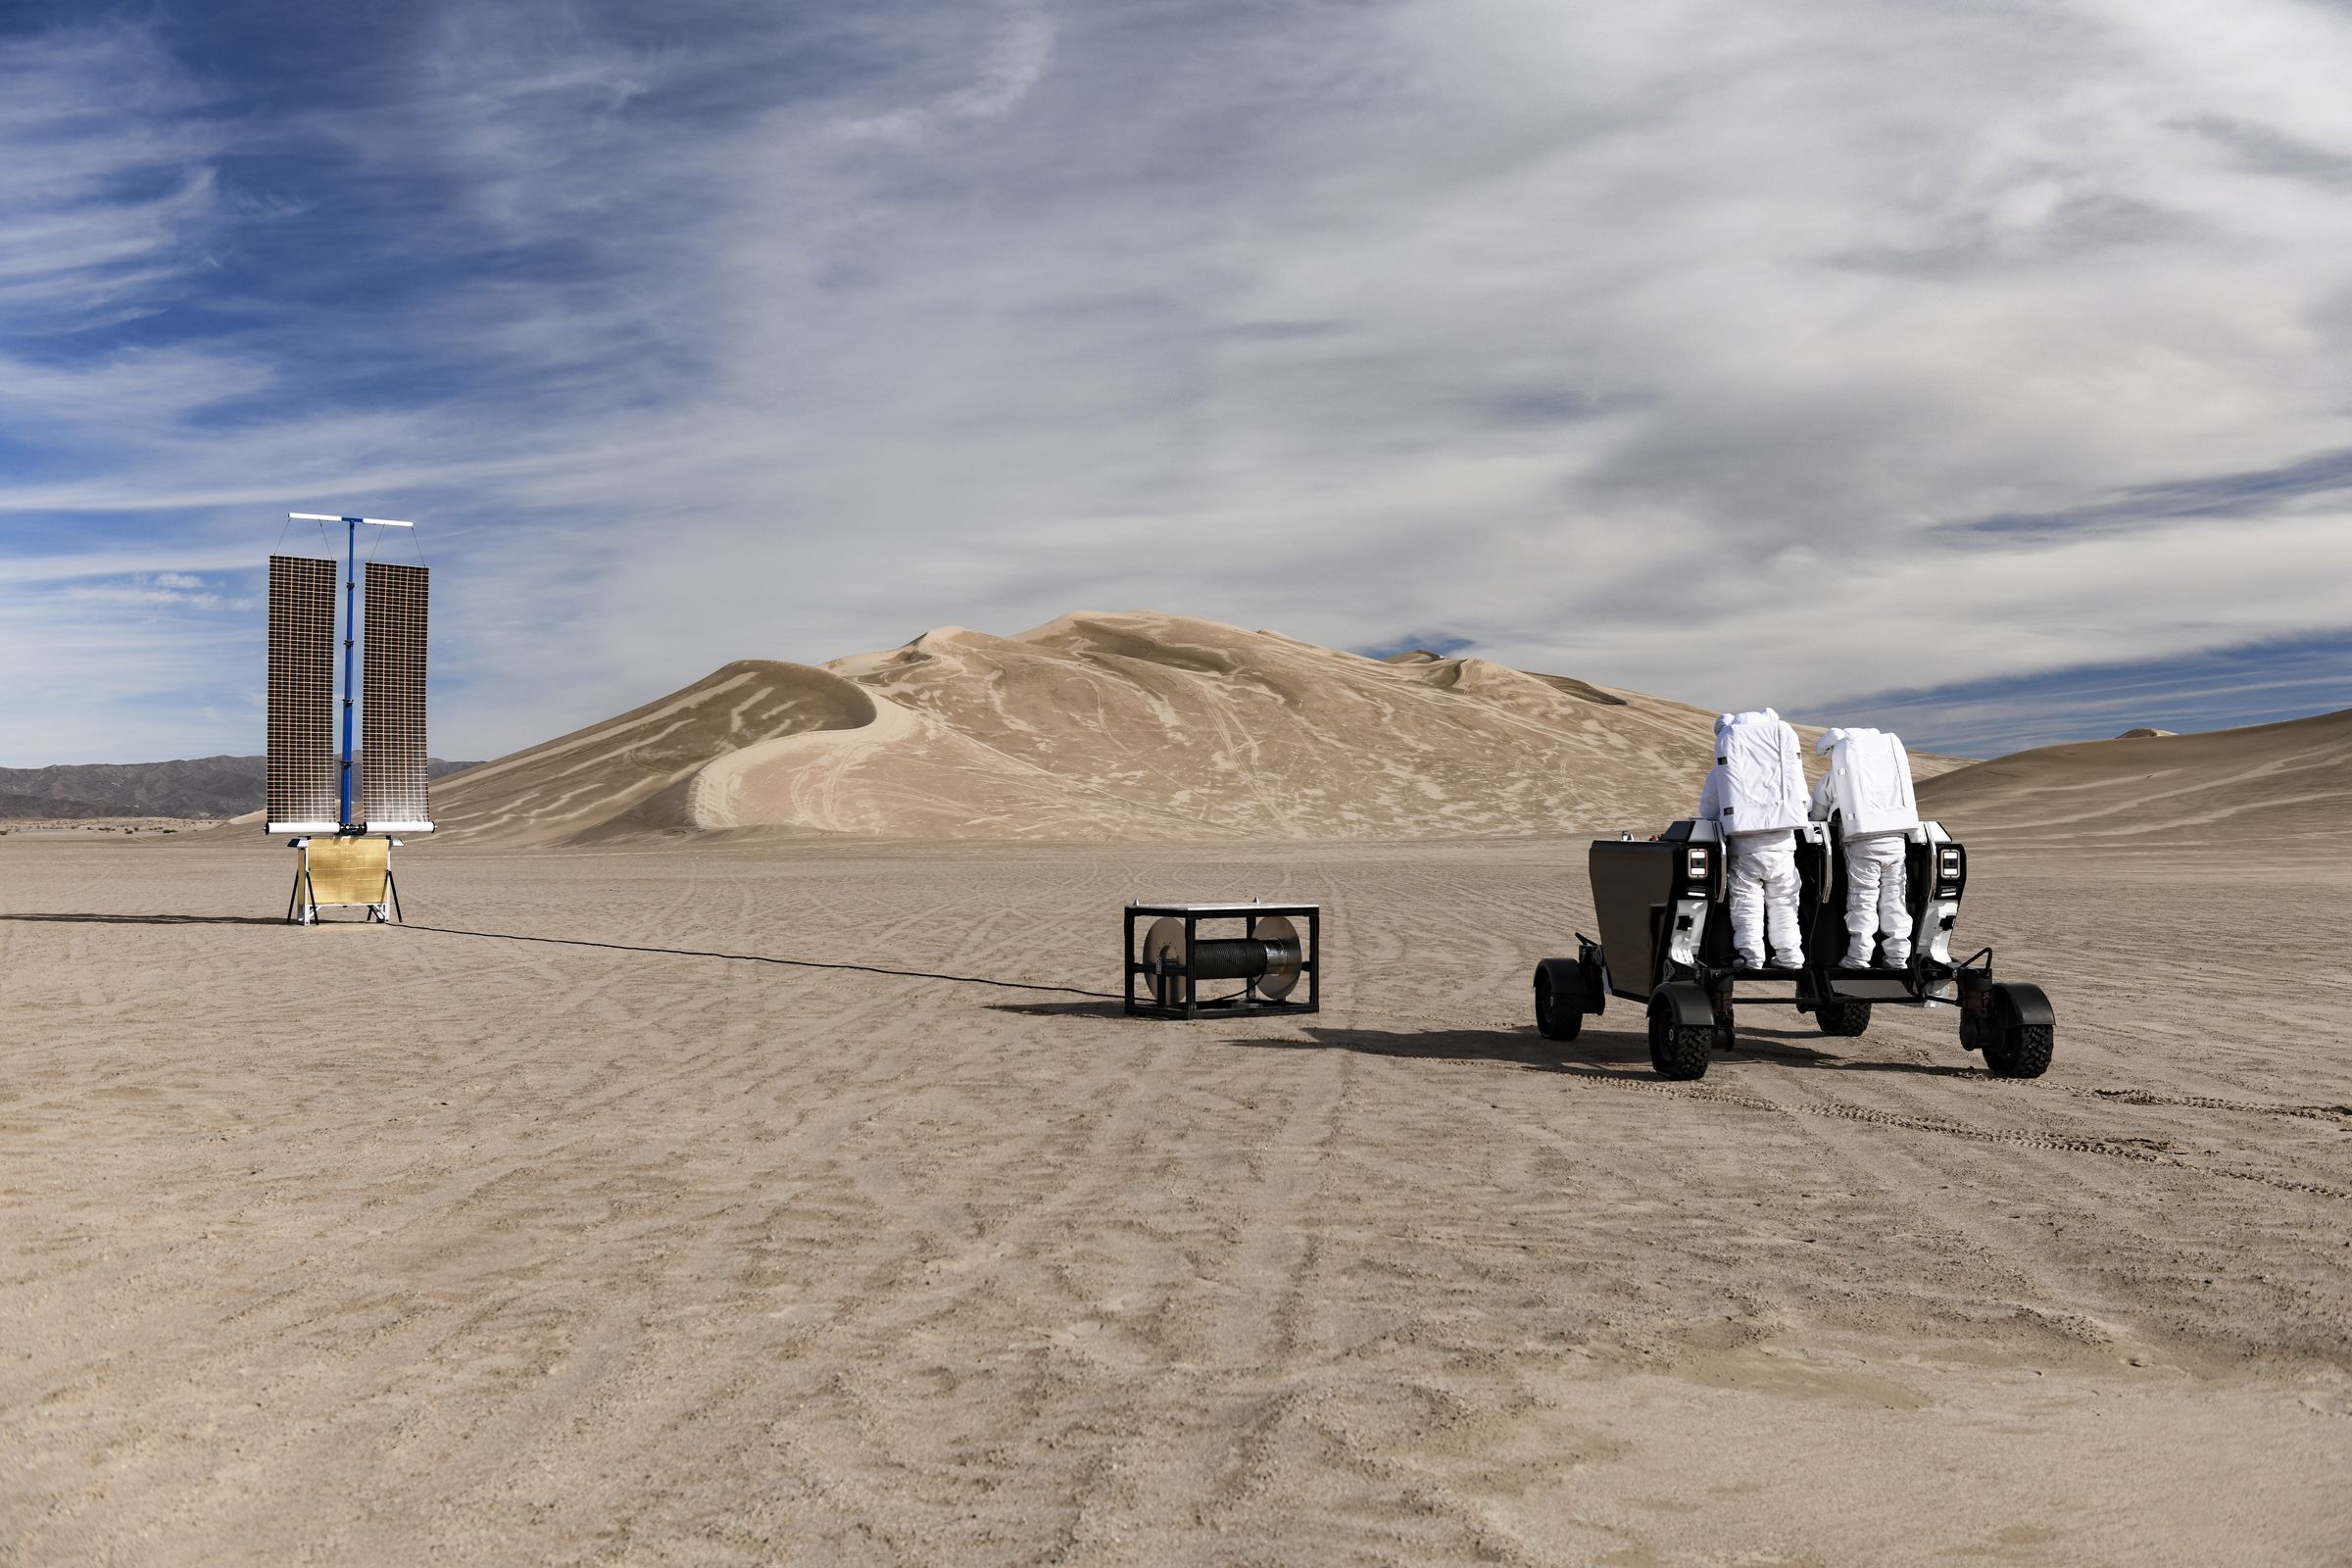 The FLEX rover prototype undergoing tests in California